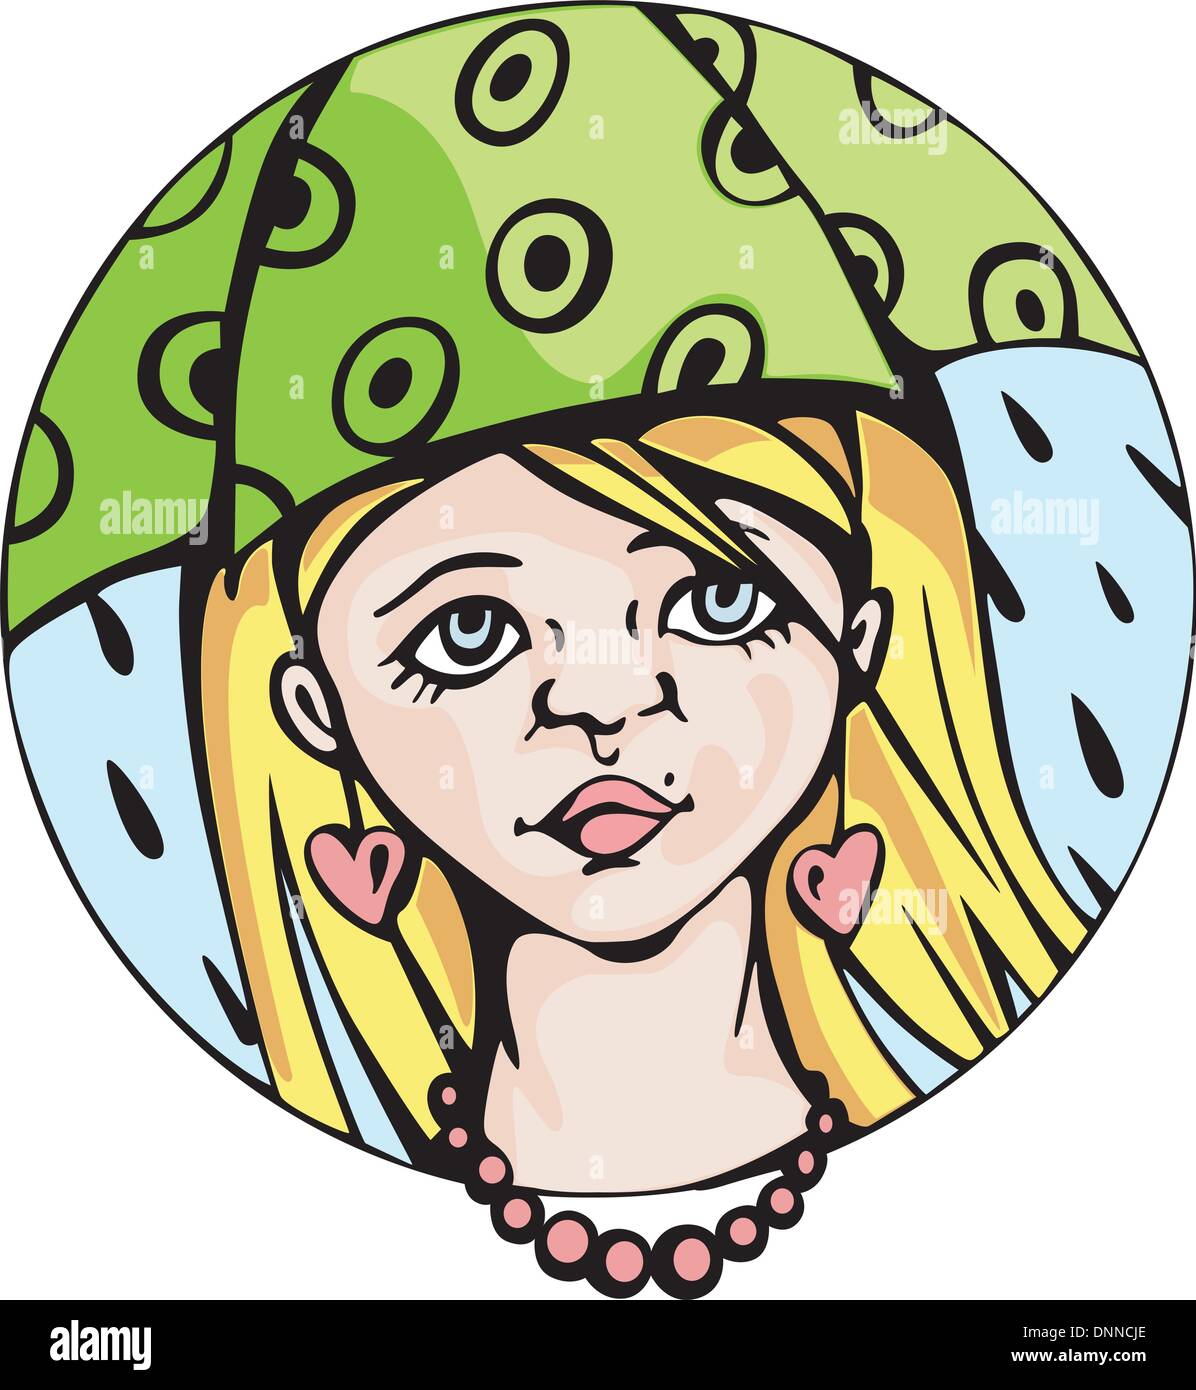 Runde Bildniss junge süße Mädchen unter grünem Dach. Bunte Vektor-Illustration. Stock Vektor